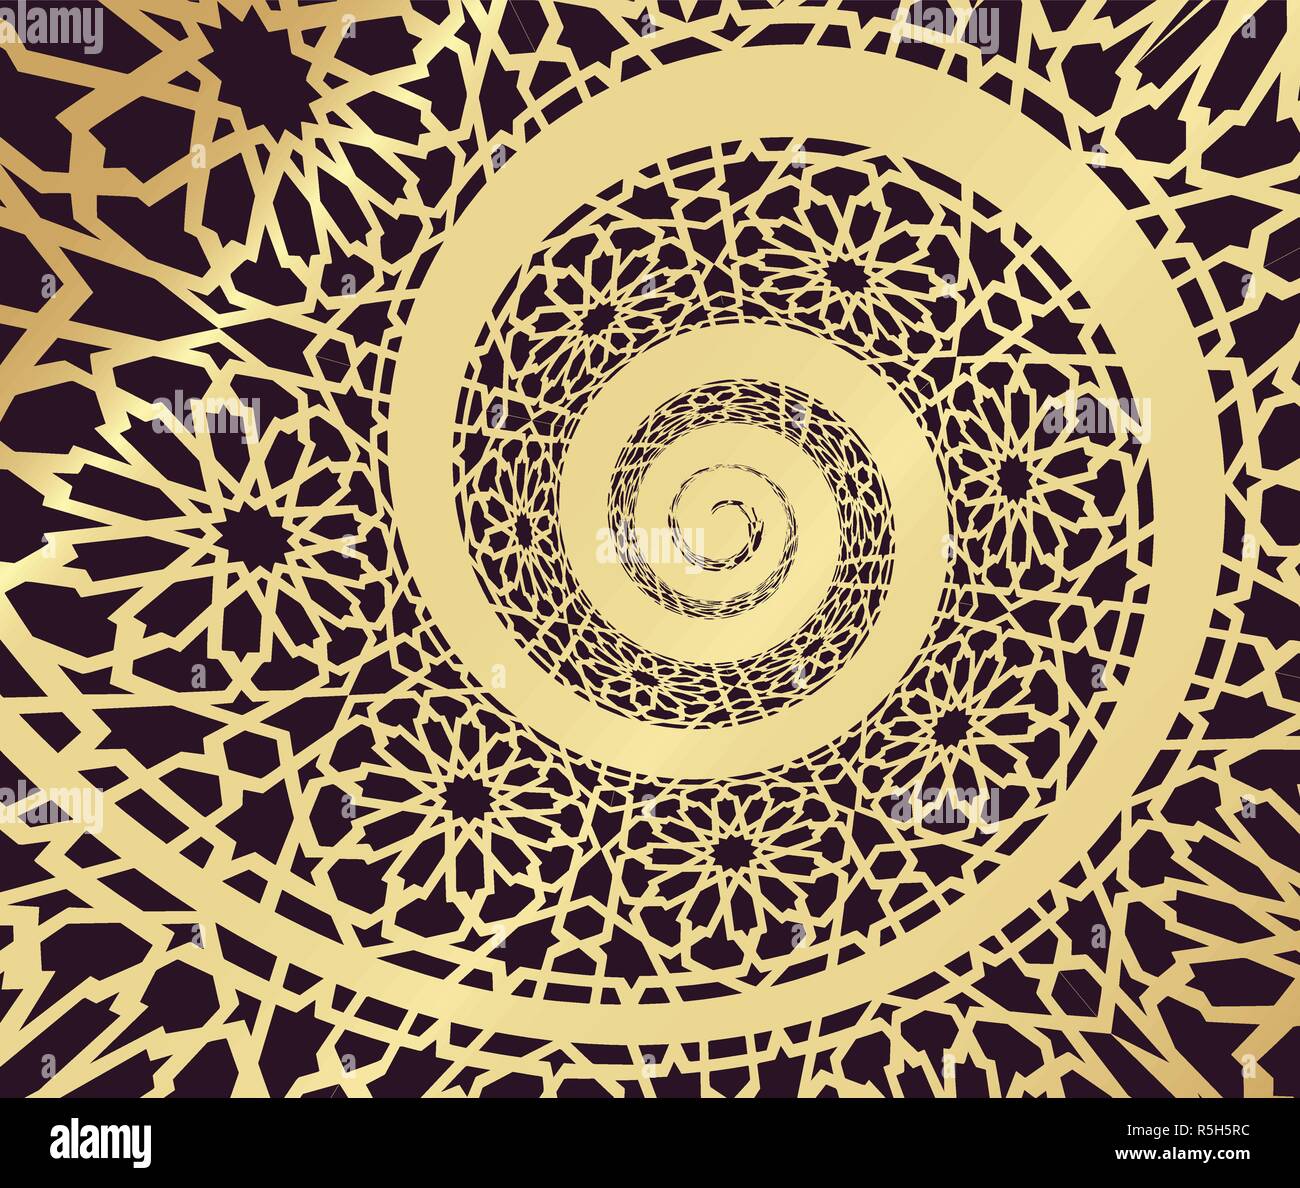 Islamic pattern, swirled in 3d spiral shape Stock Vector